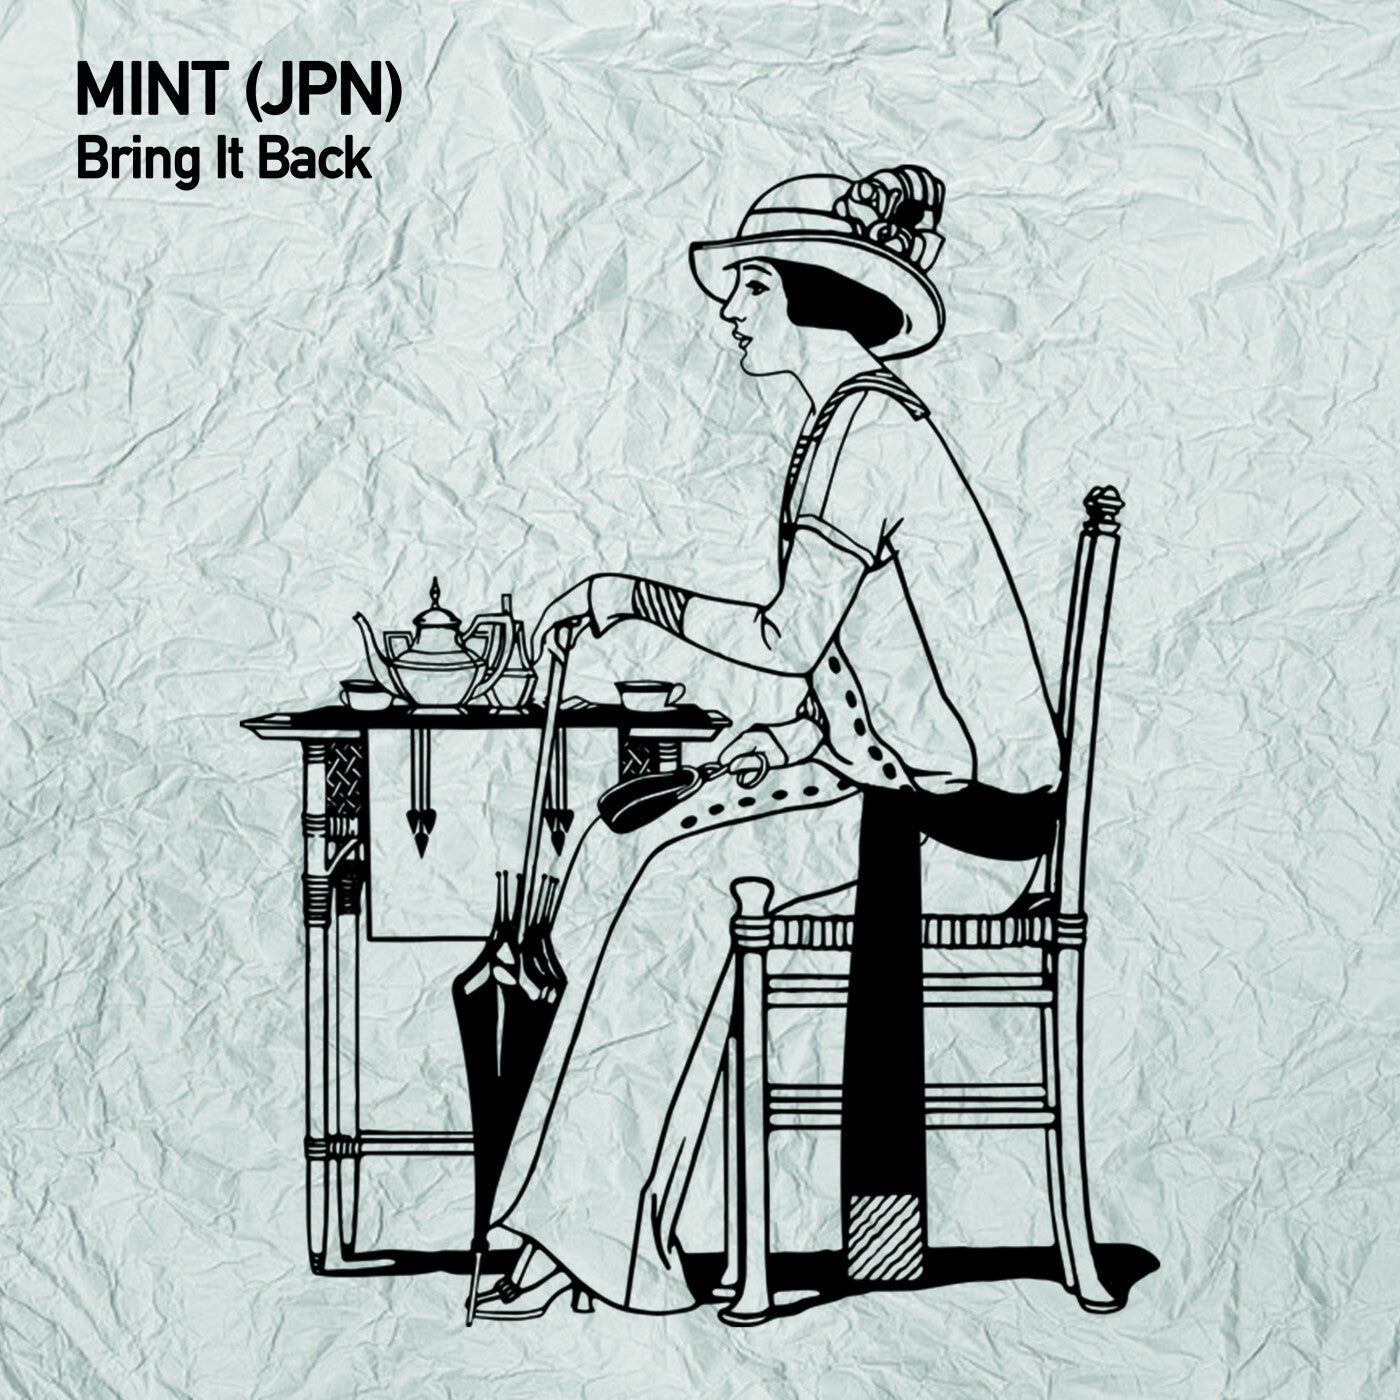 Mint (JPN) - Never Give Up (Original Mix)